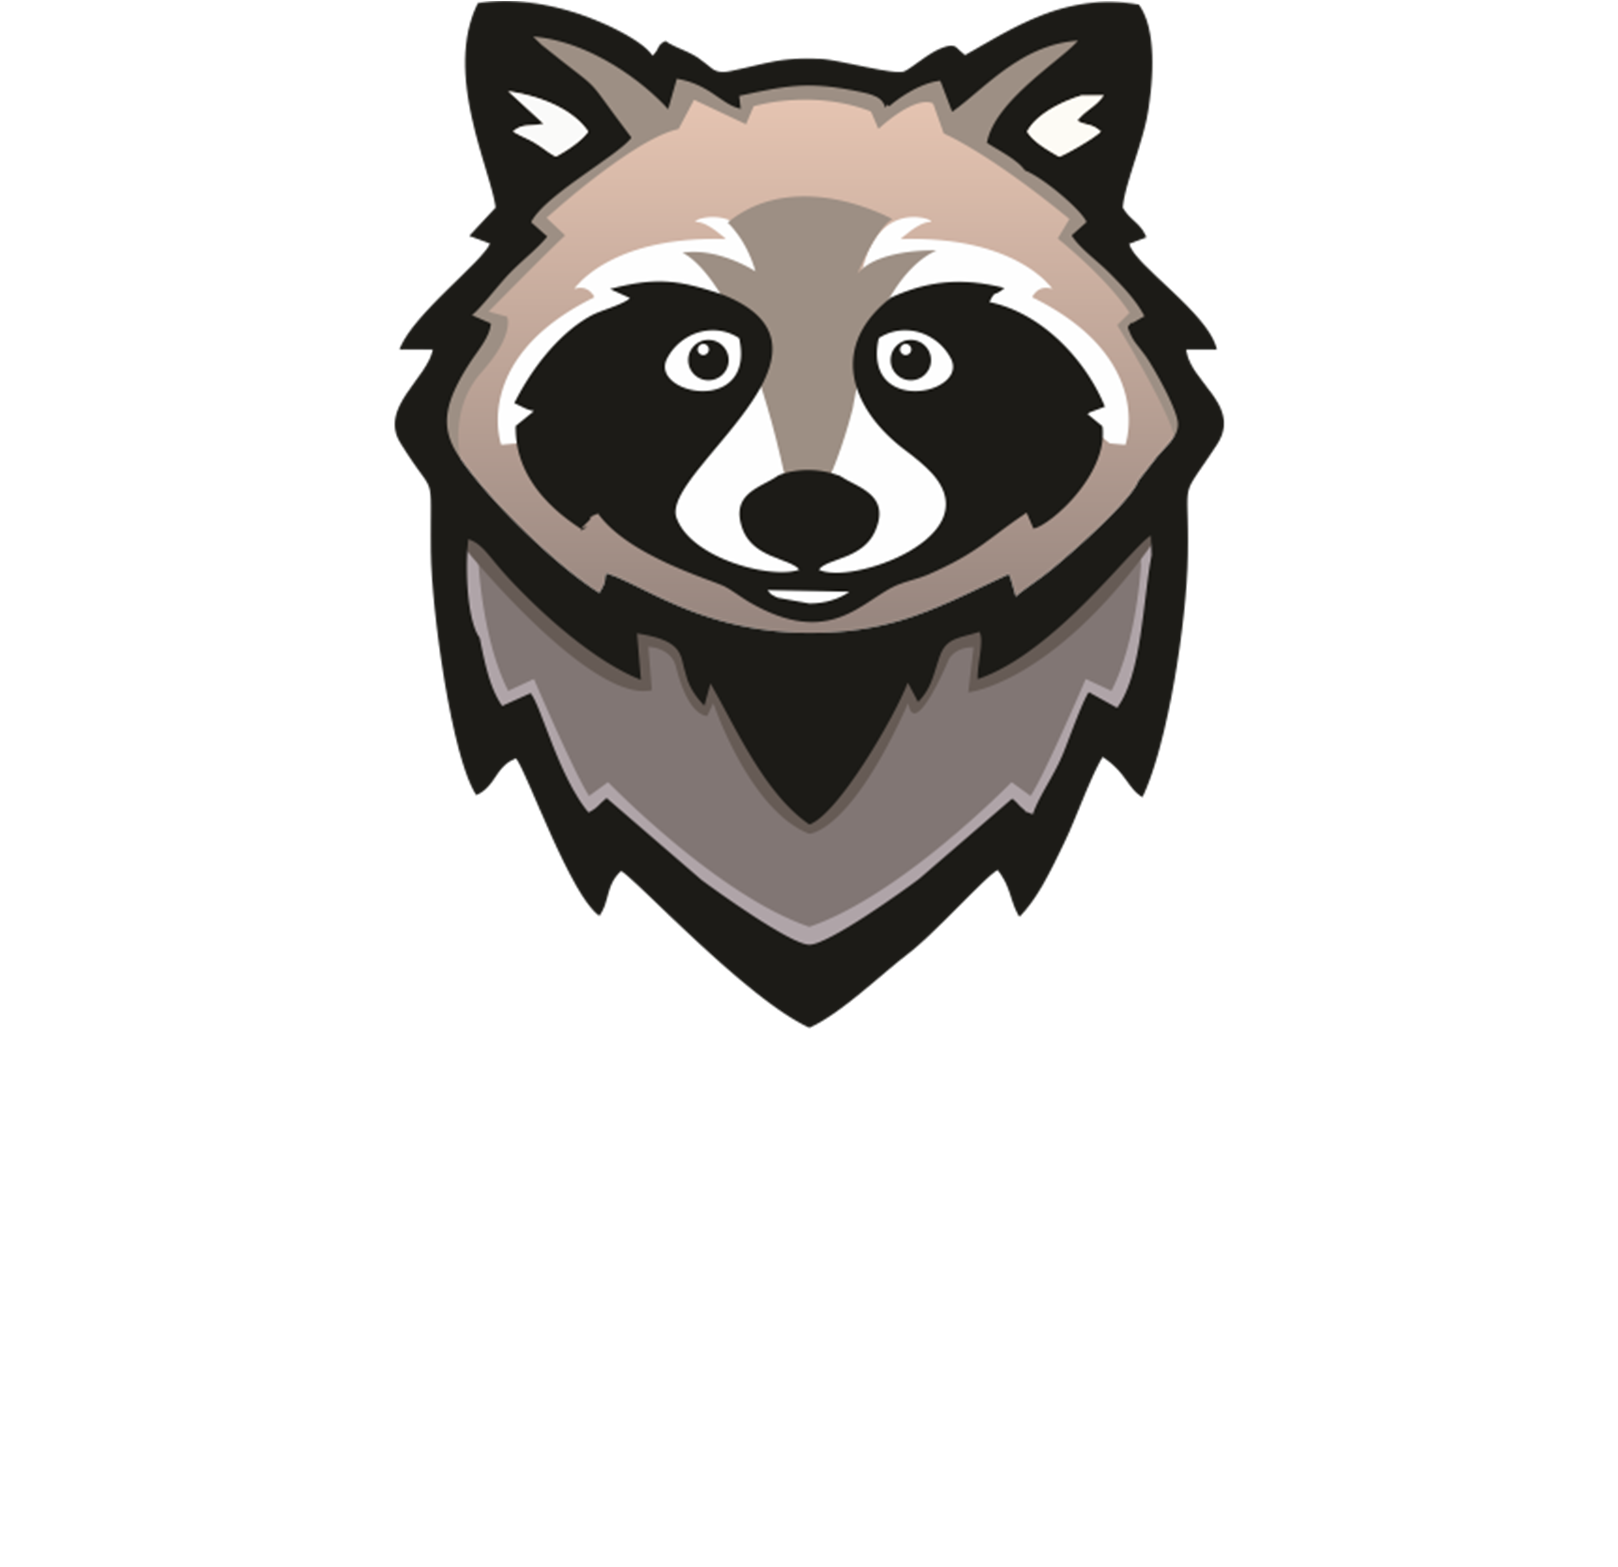 A Raccoon Head On A Black Background